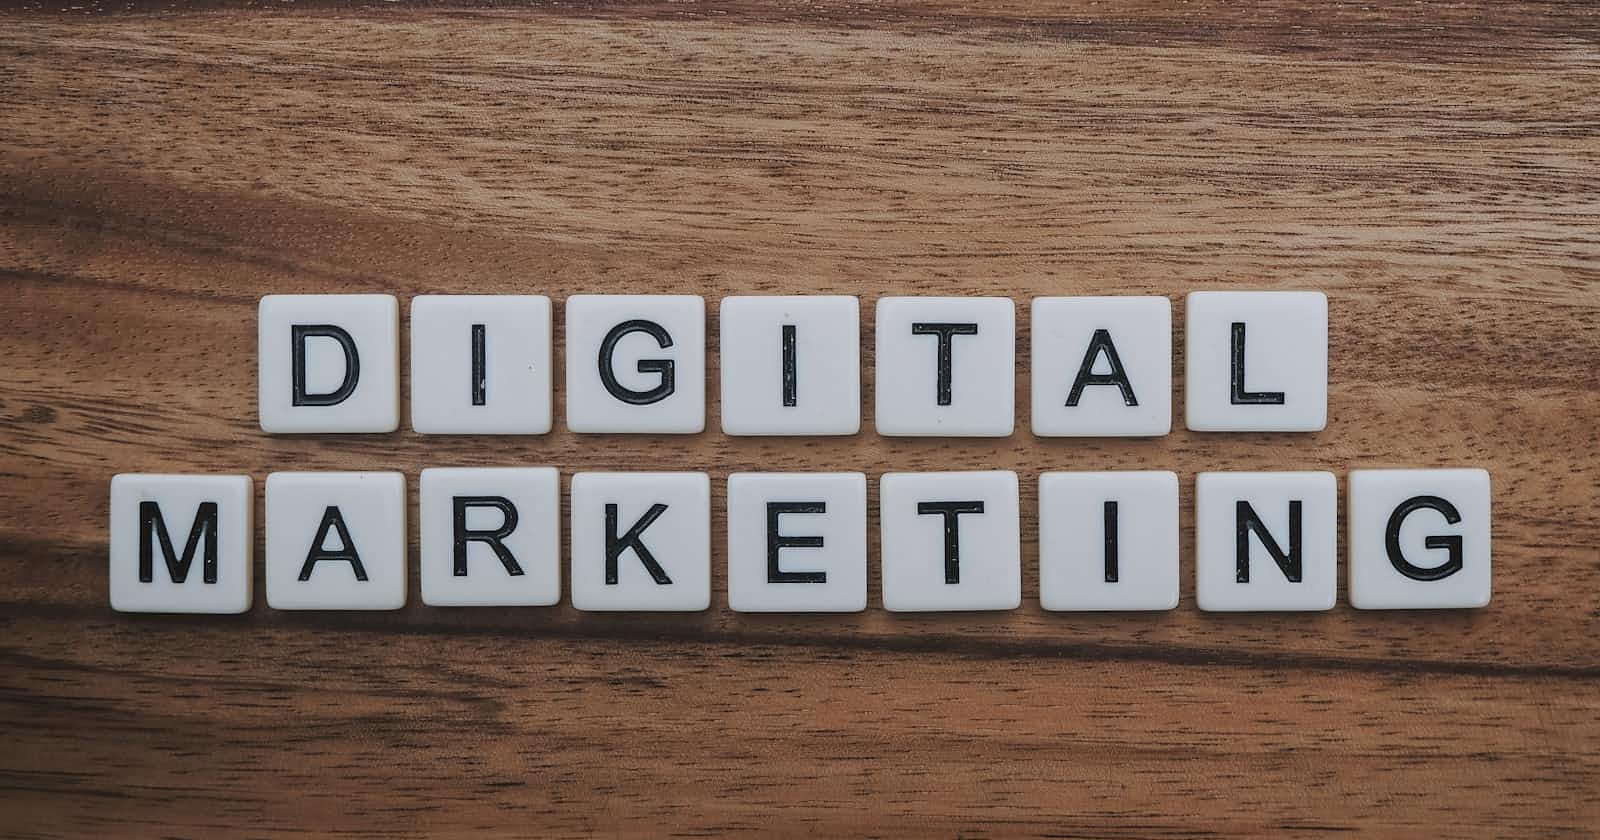 Getting Around the Internet: A Handbook for Successful Digital Marketing